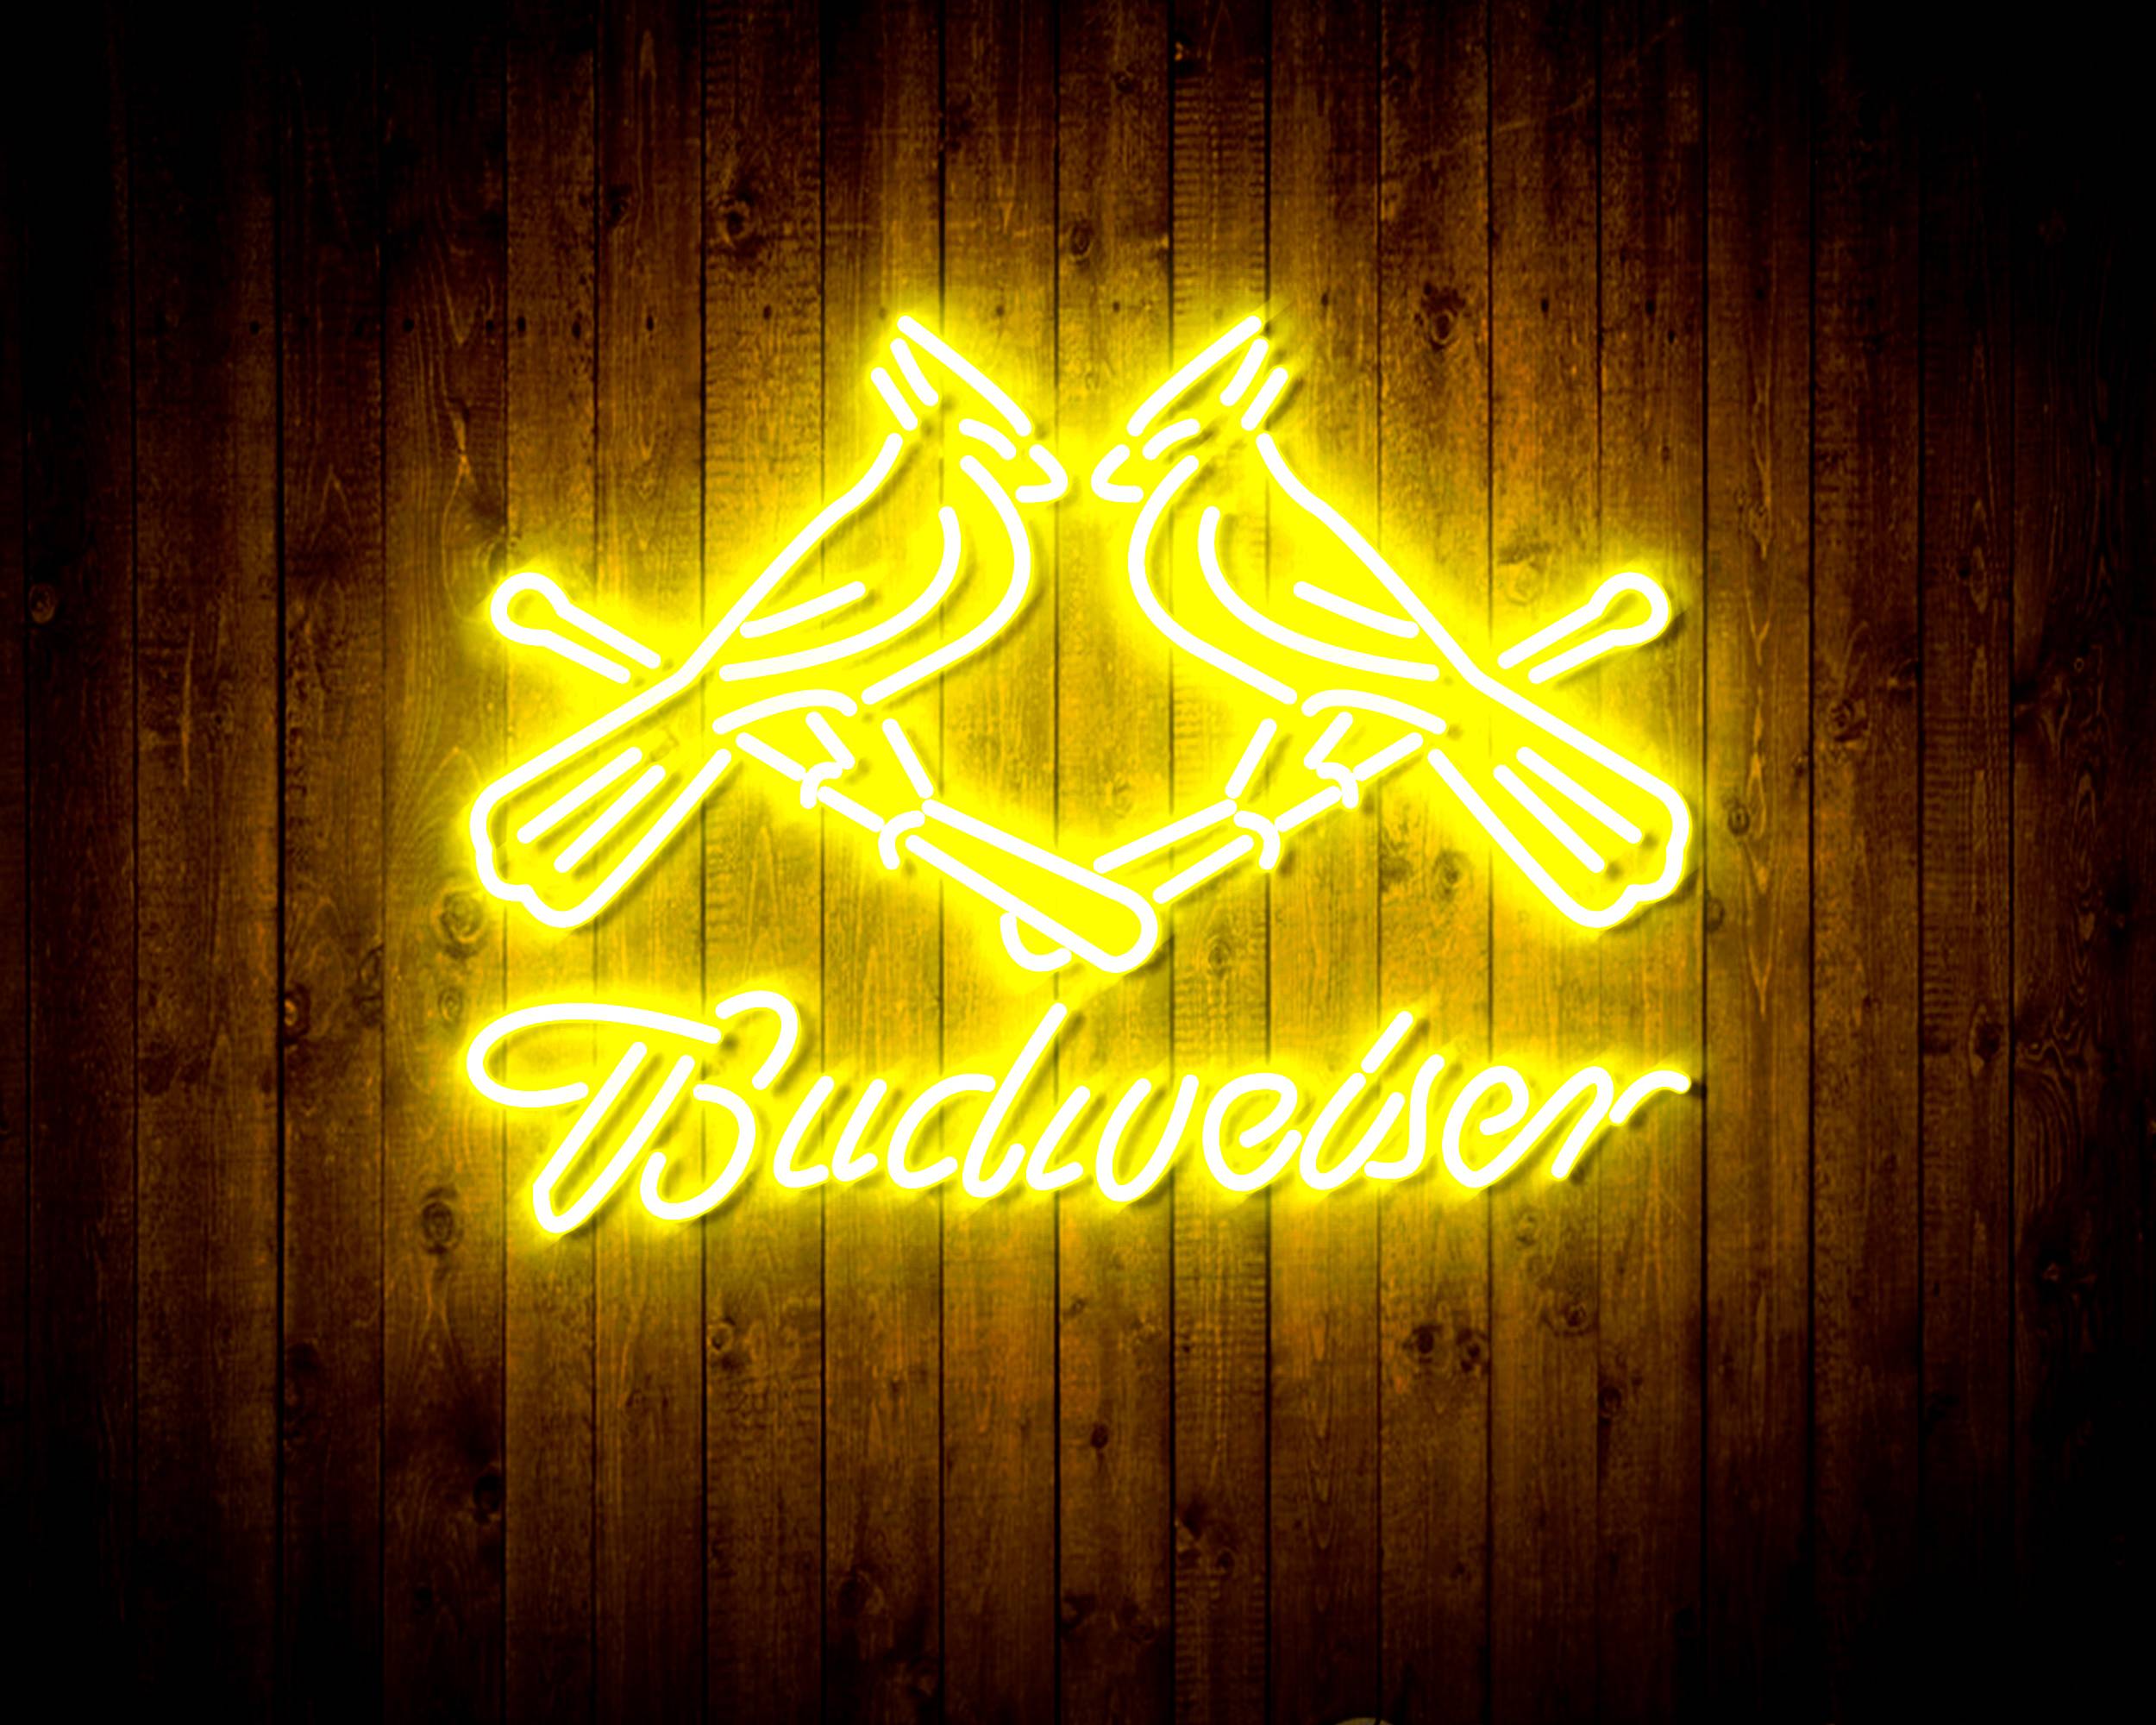 Budweiser with Cadinals Handmade Neon Flex LED Sign